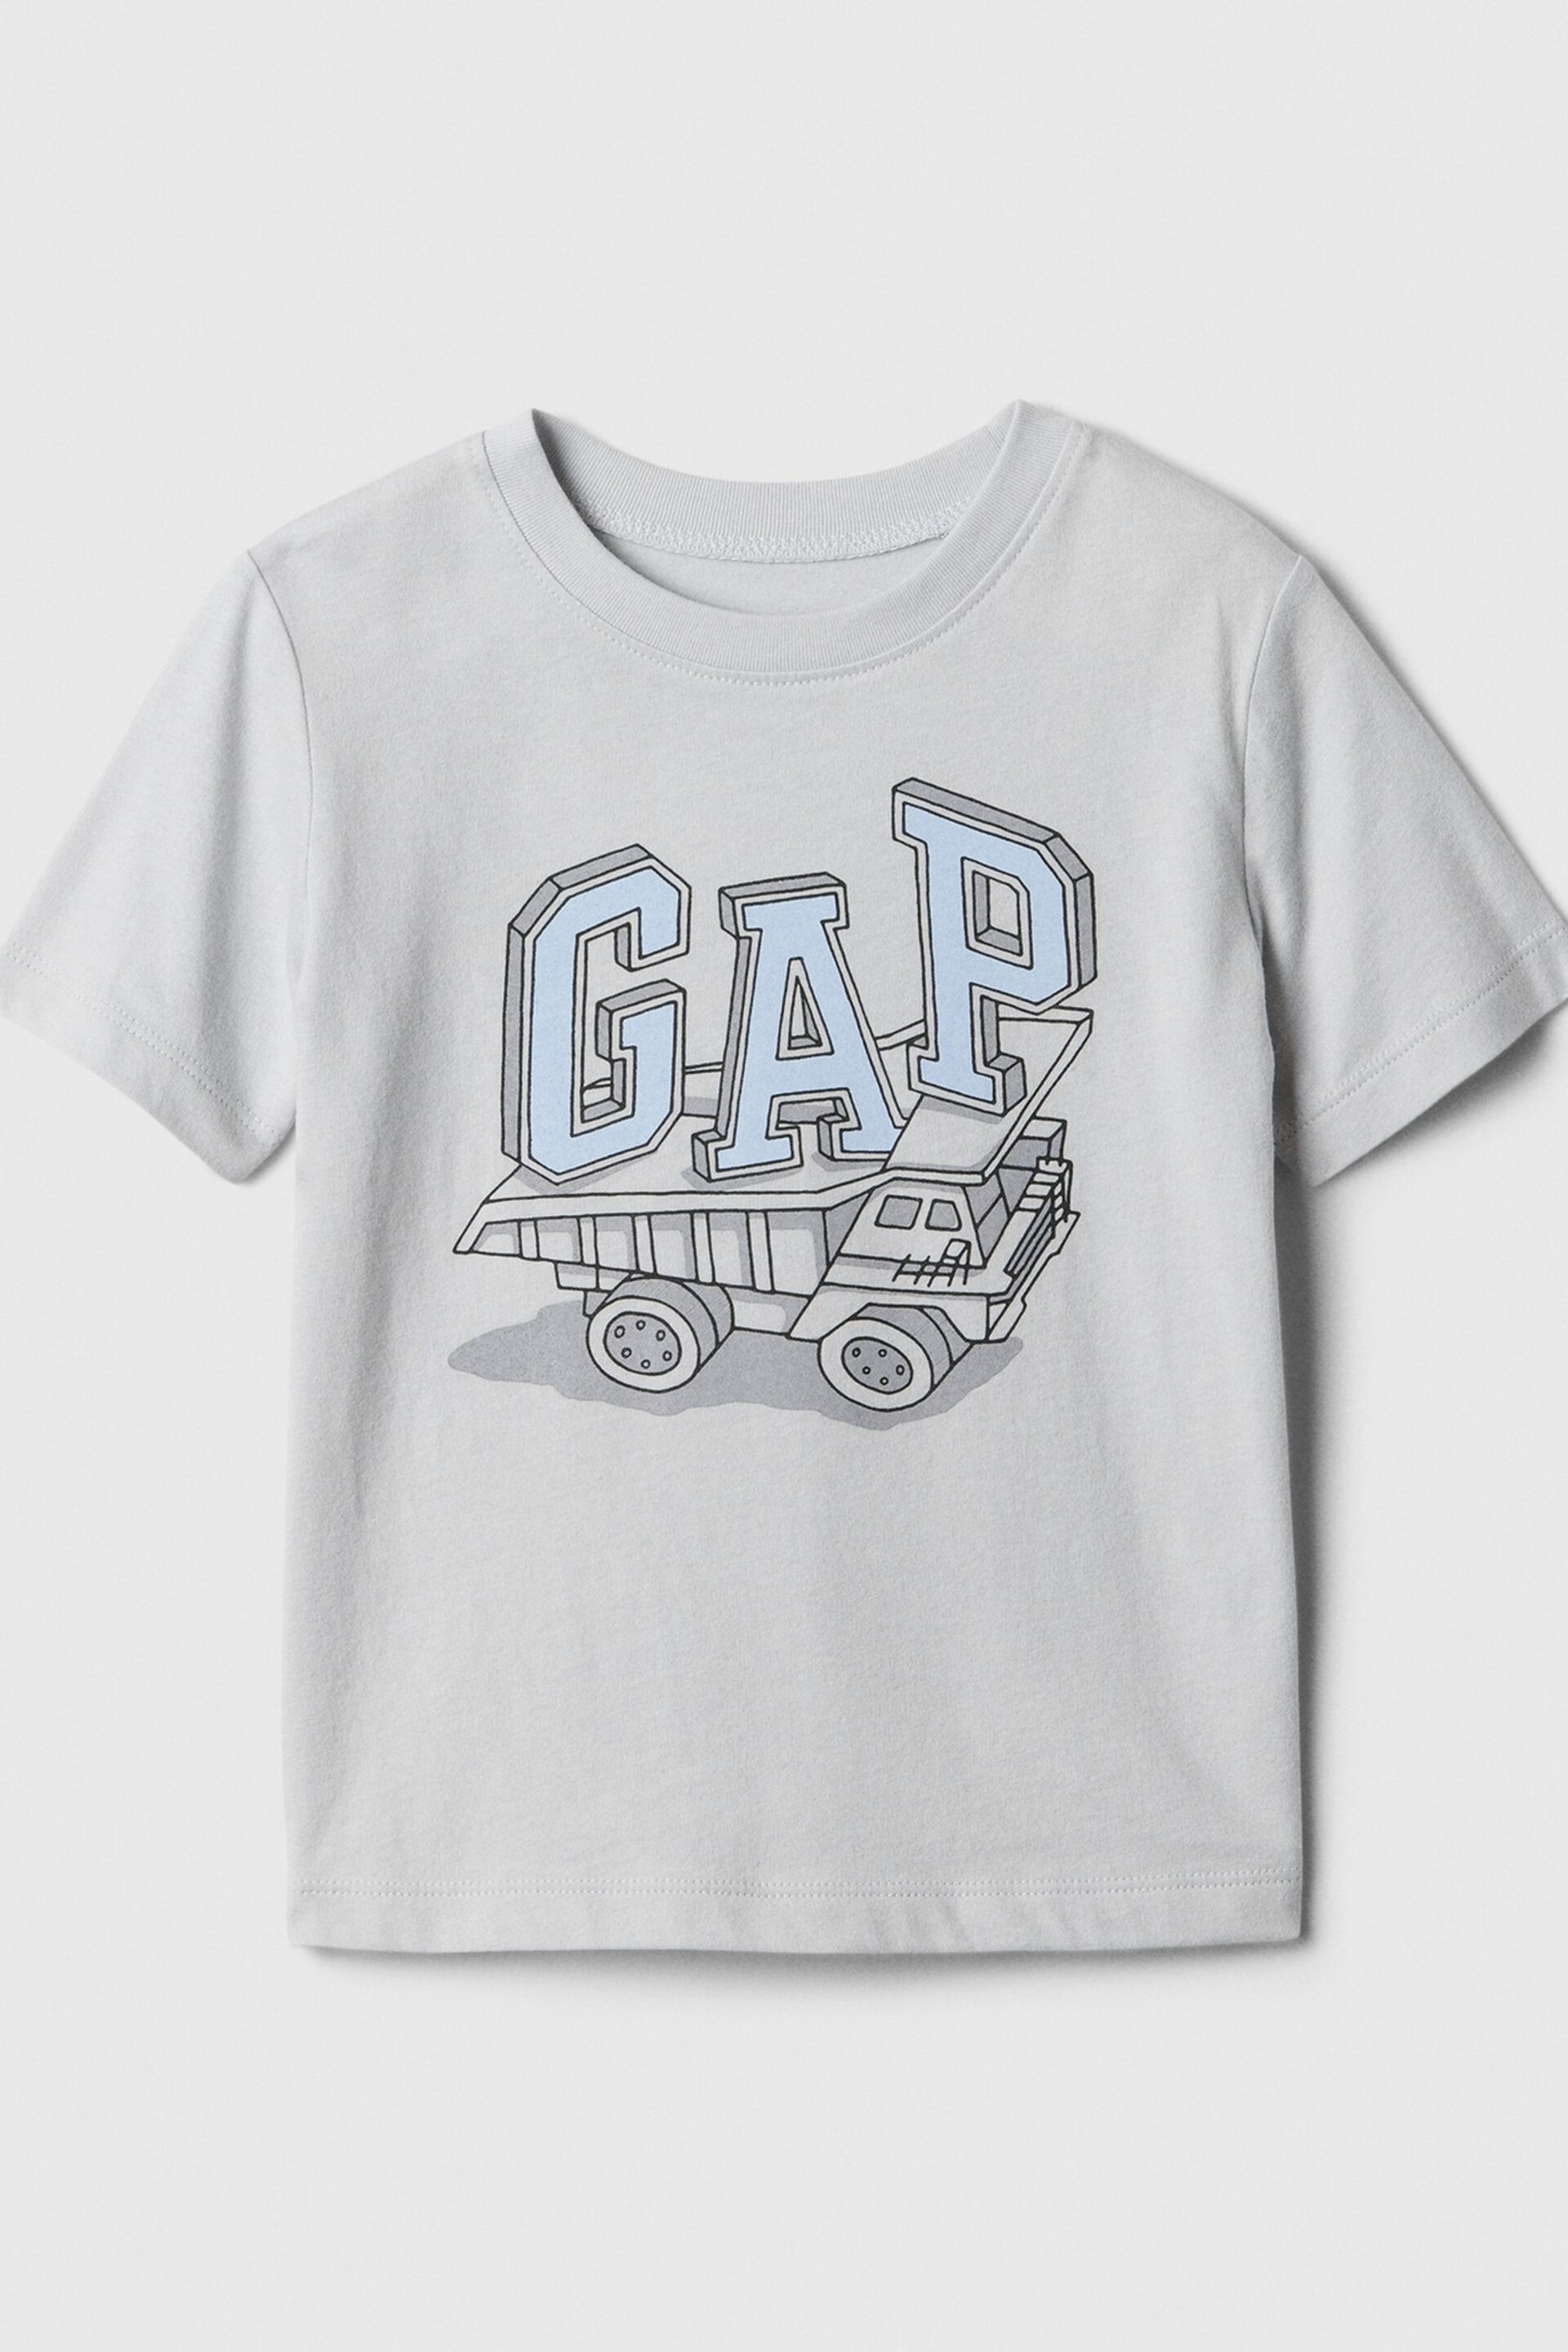 Gap Grey Truck Graphic Logo Short Sleeve Crew Neck T-Shirt (Newborn-5yrs) - Image 1 of 1